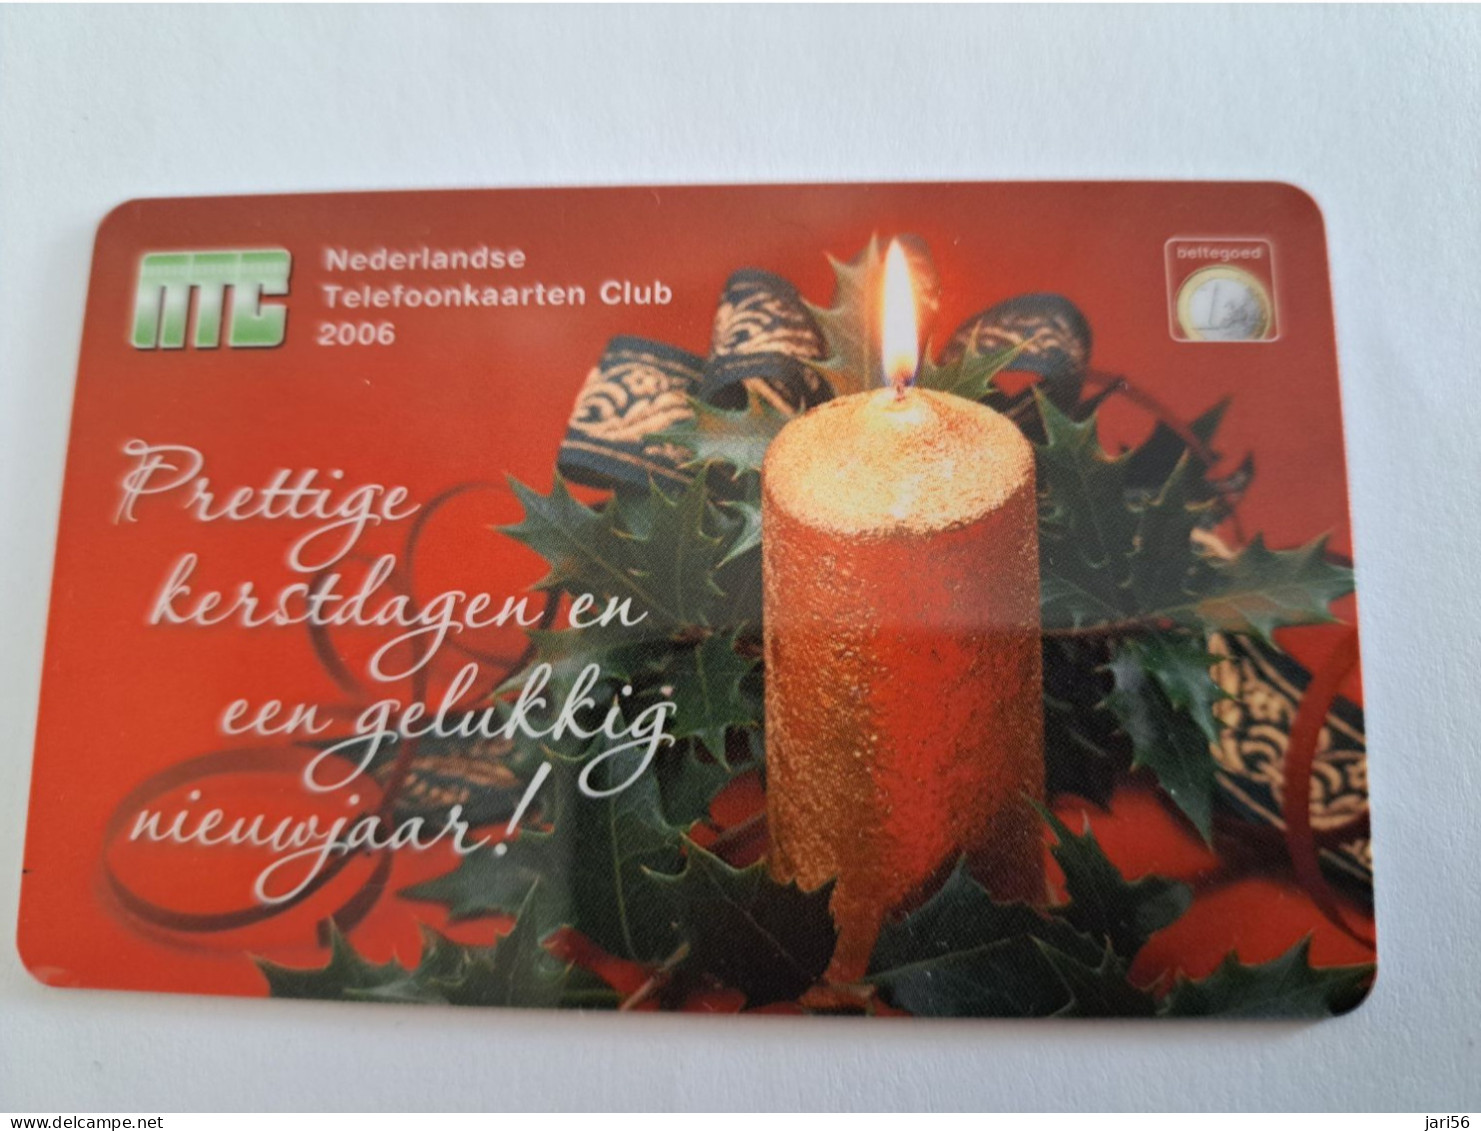 NETHERLANDS /  PREPAID/ NTC CLUB/ MEMBERCARD 2006/  €  1,-   - MINT  CARD  ** 13952** - Publiques